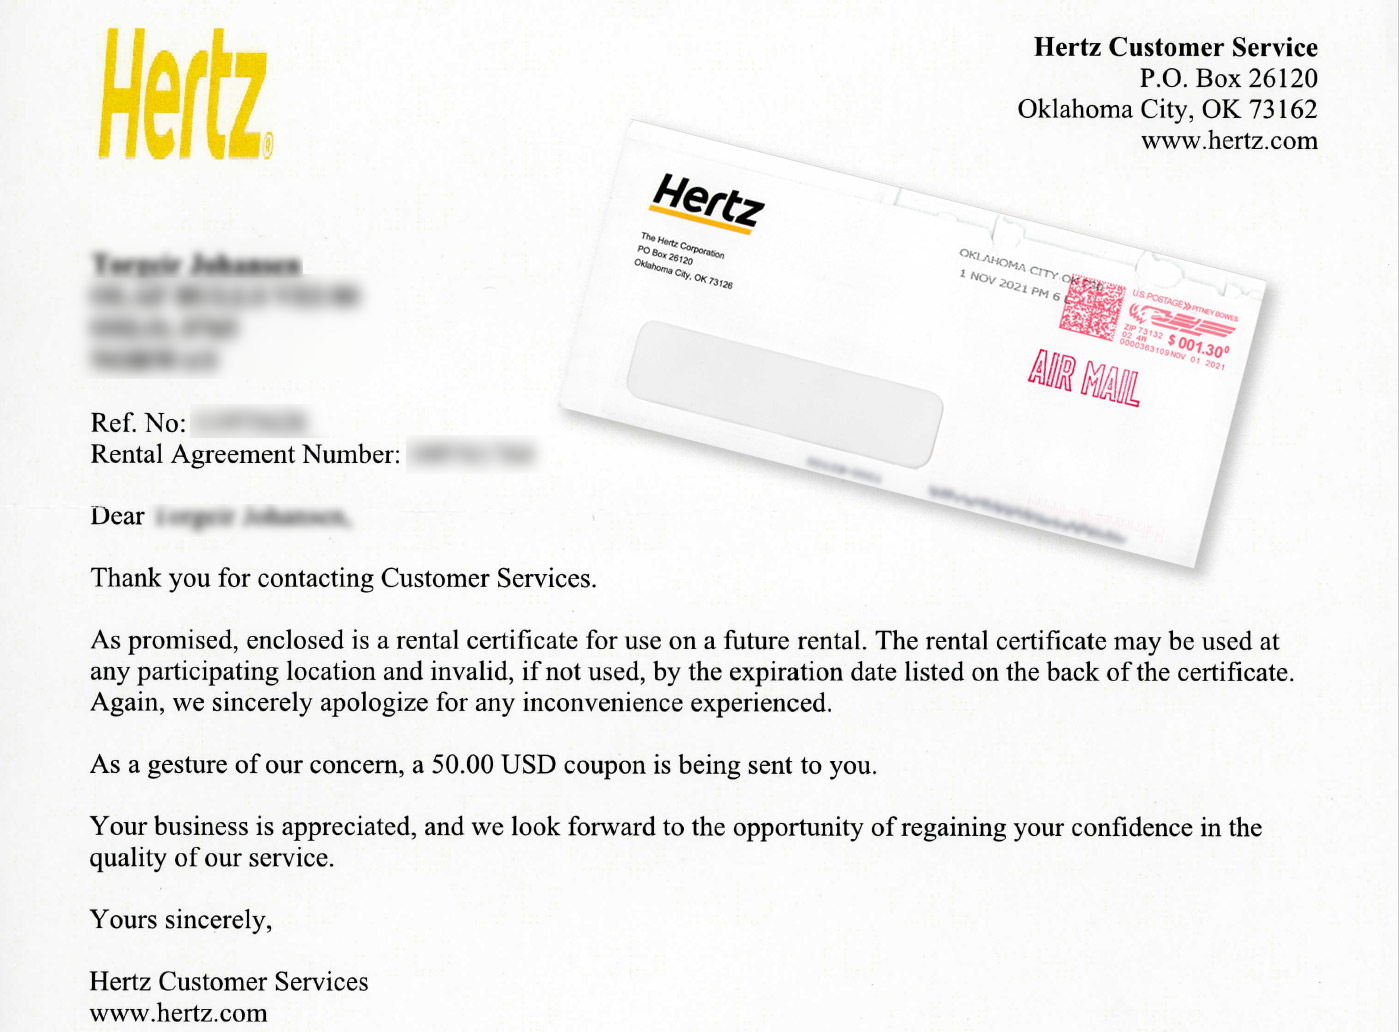 Hertz rental certificate for future rental.